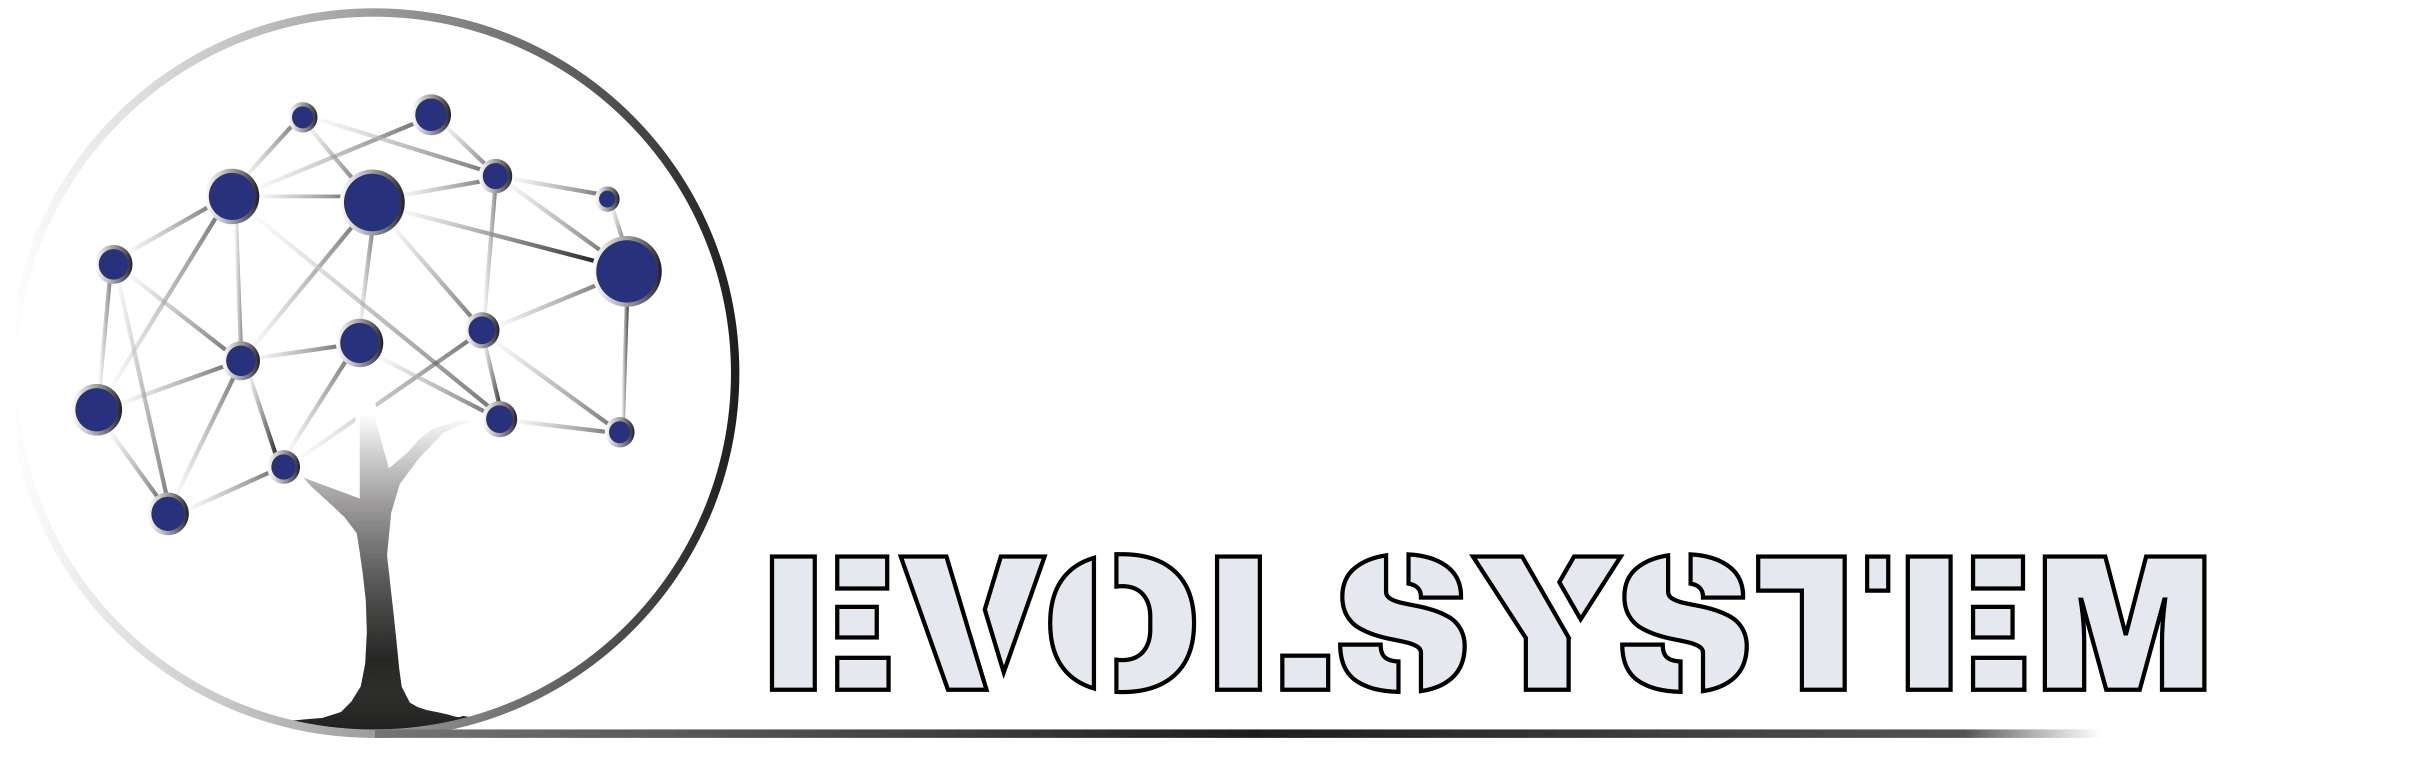 Evolsystem